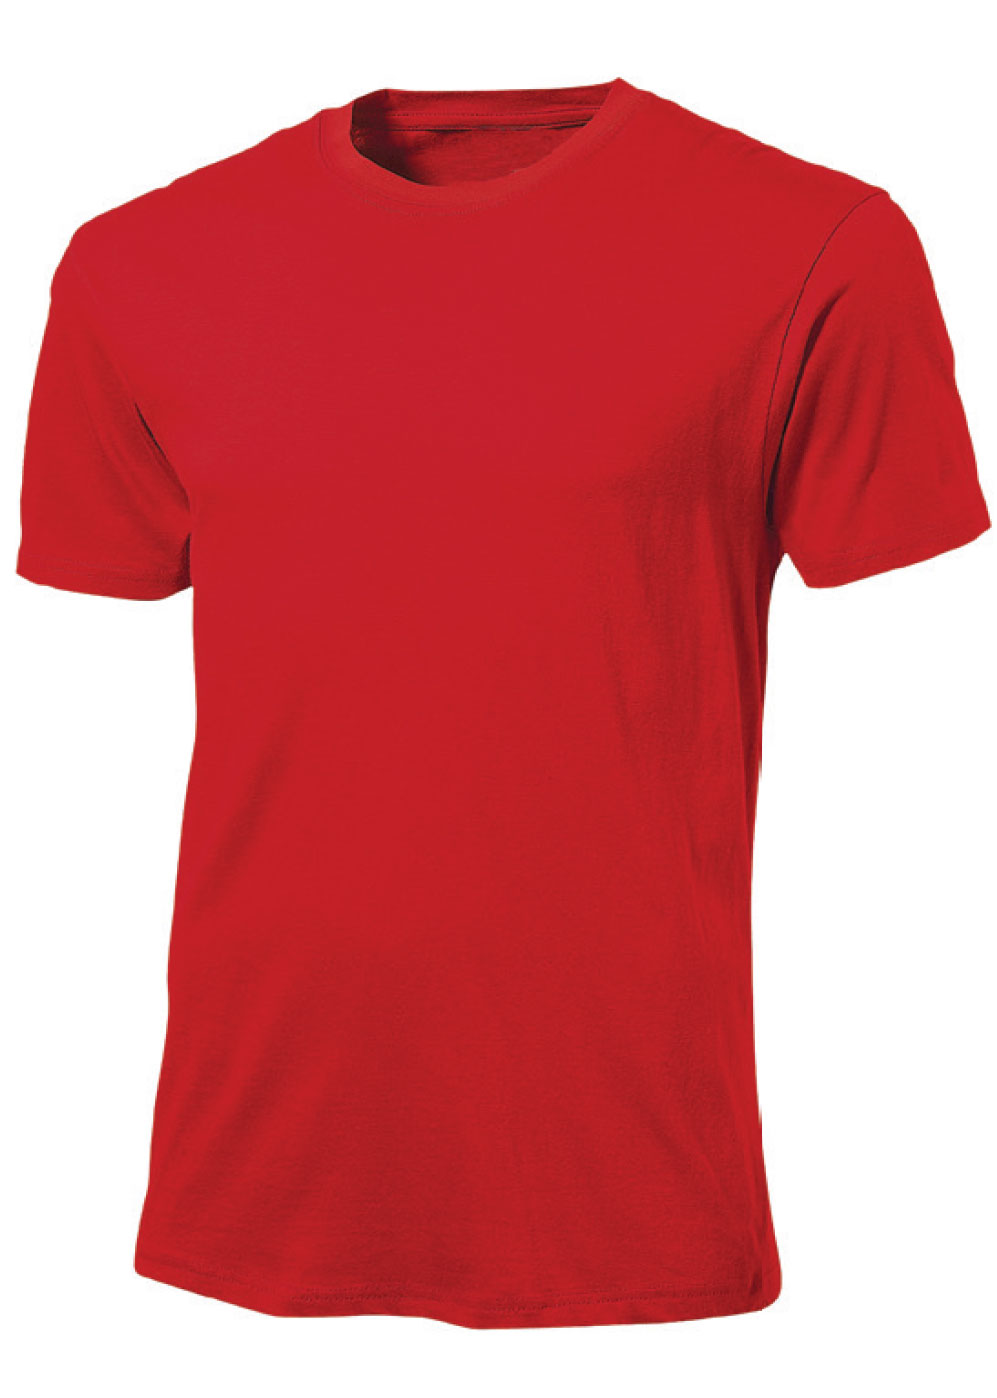 New Short Sleeve Plain Classic Shirts | Turtle Creek Clothing ...